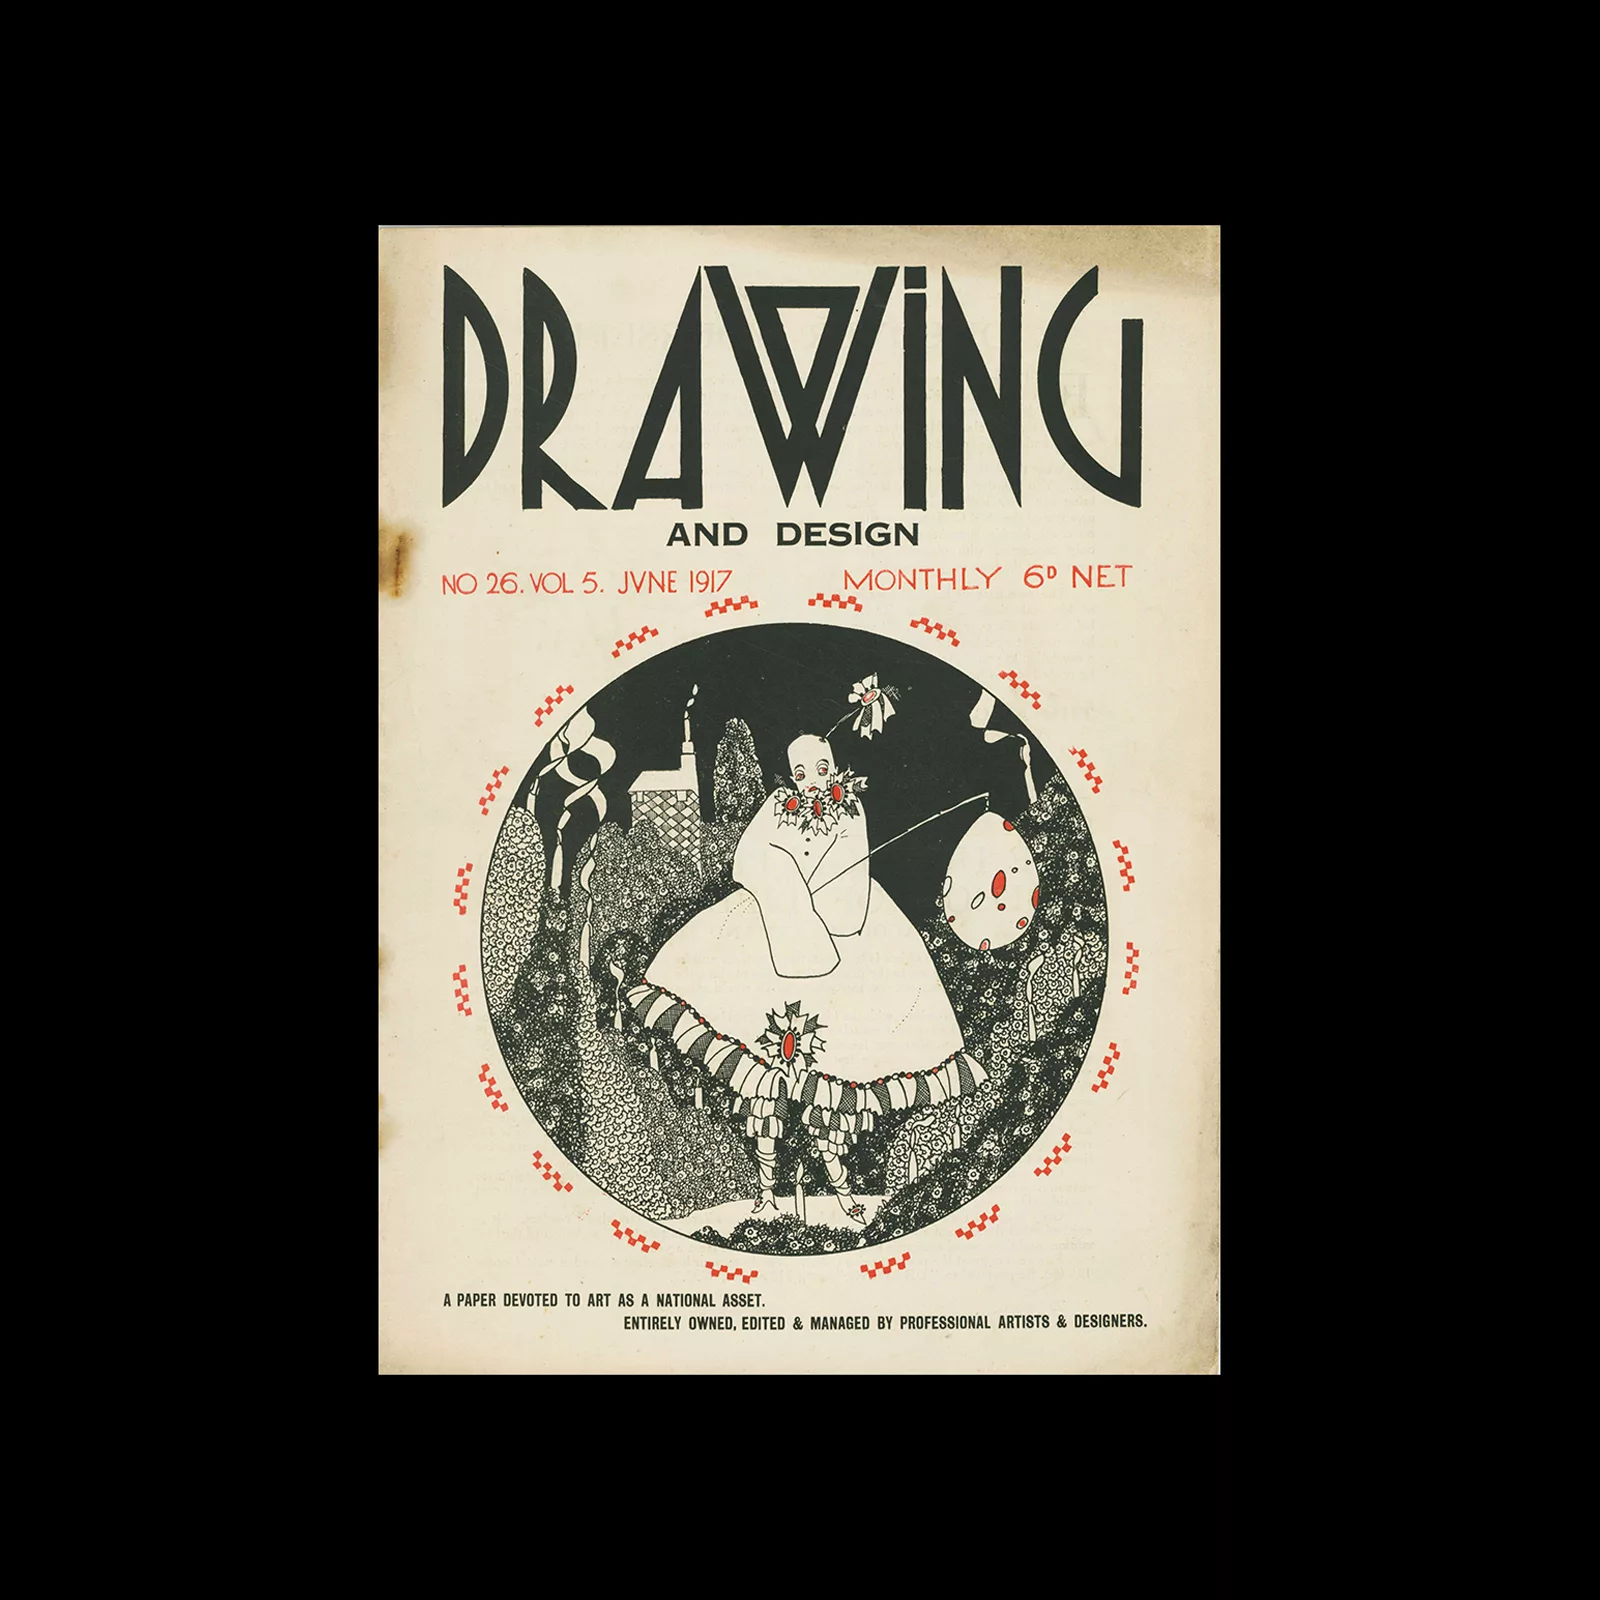 Drawing and Design No 26, Vol 5, June 1917